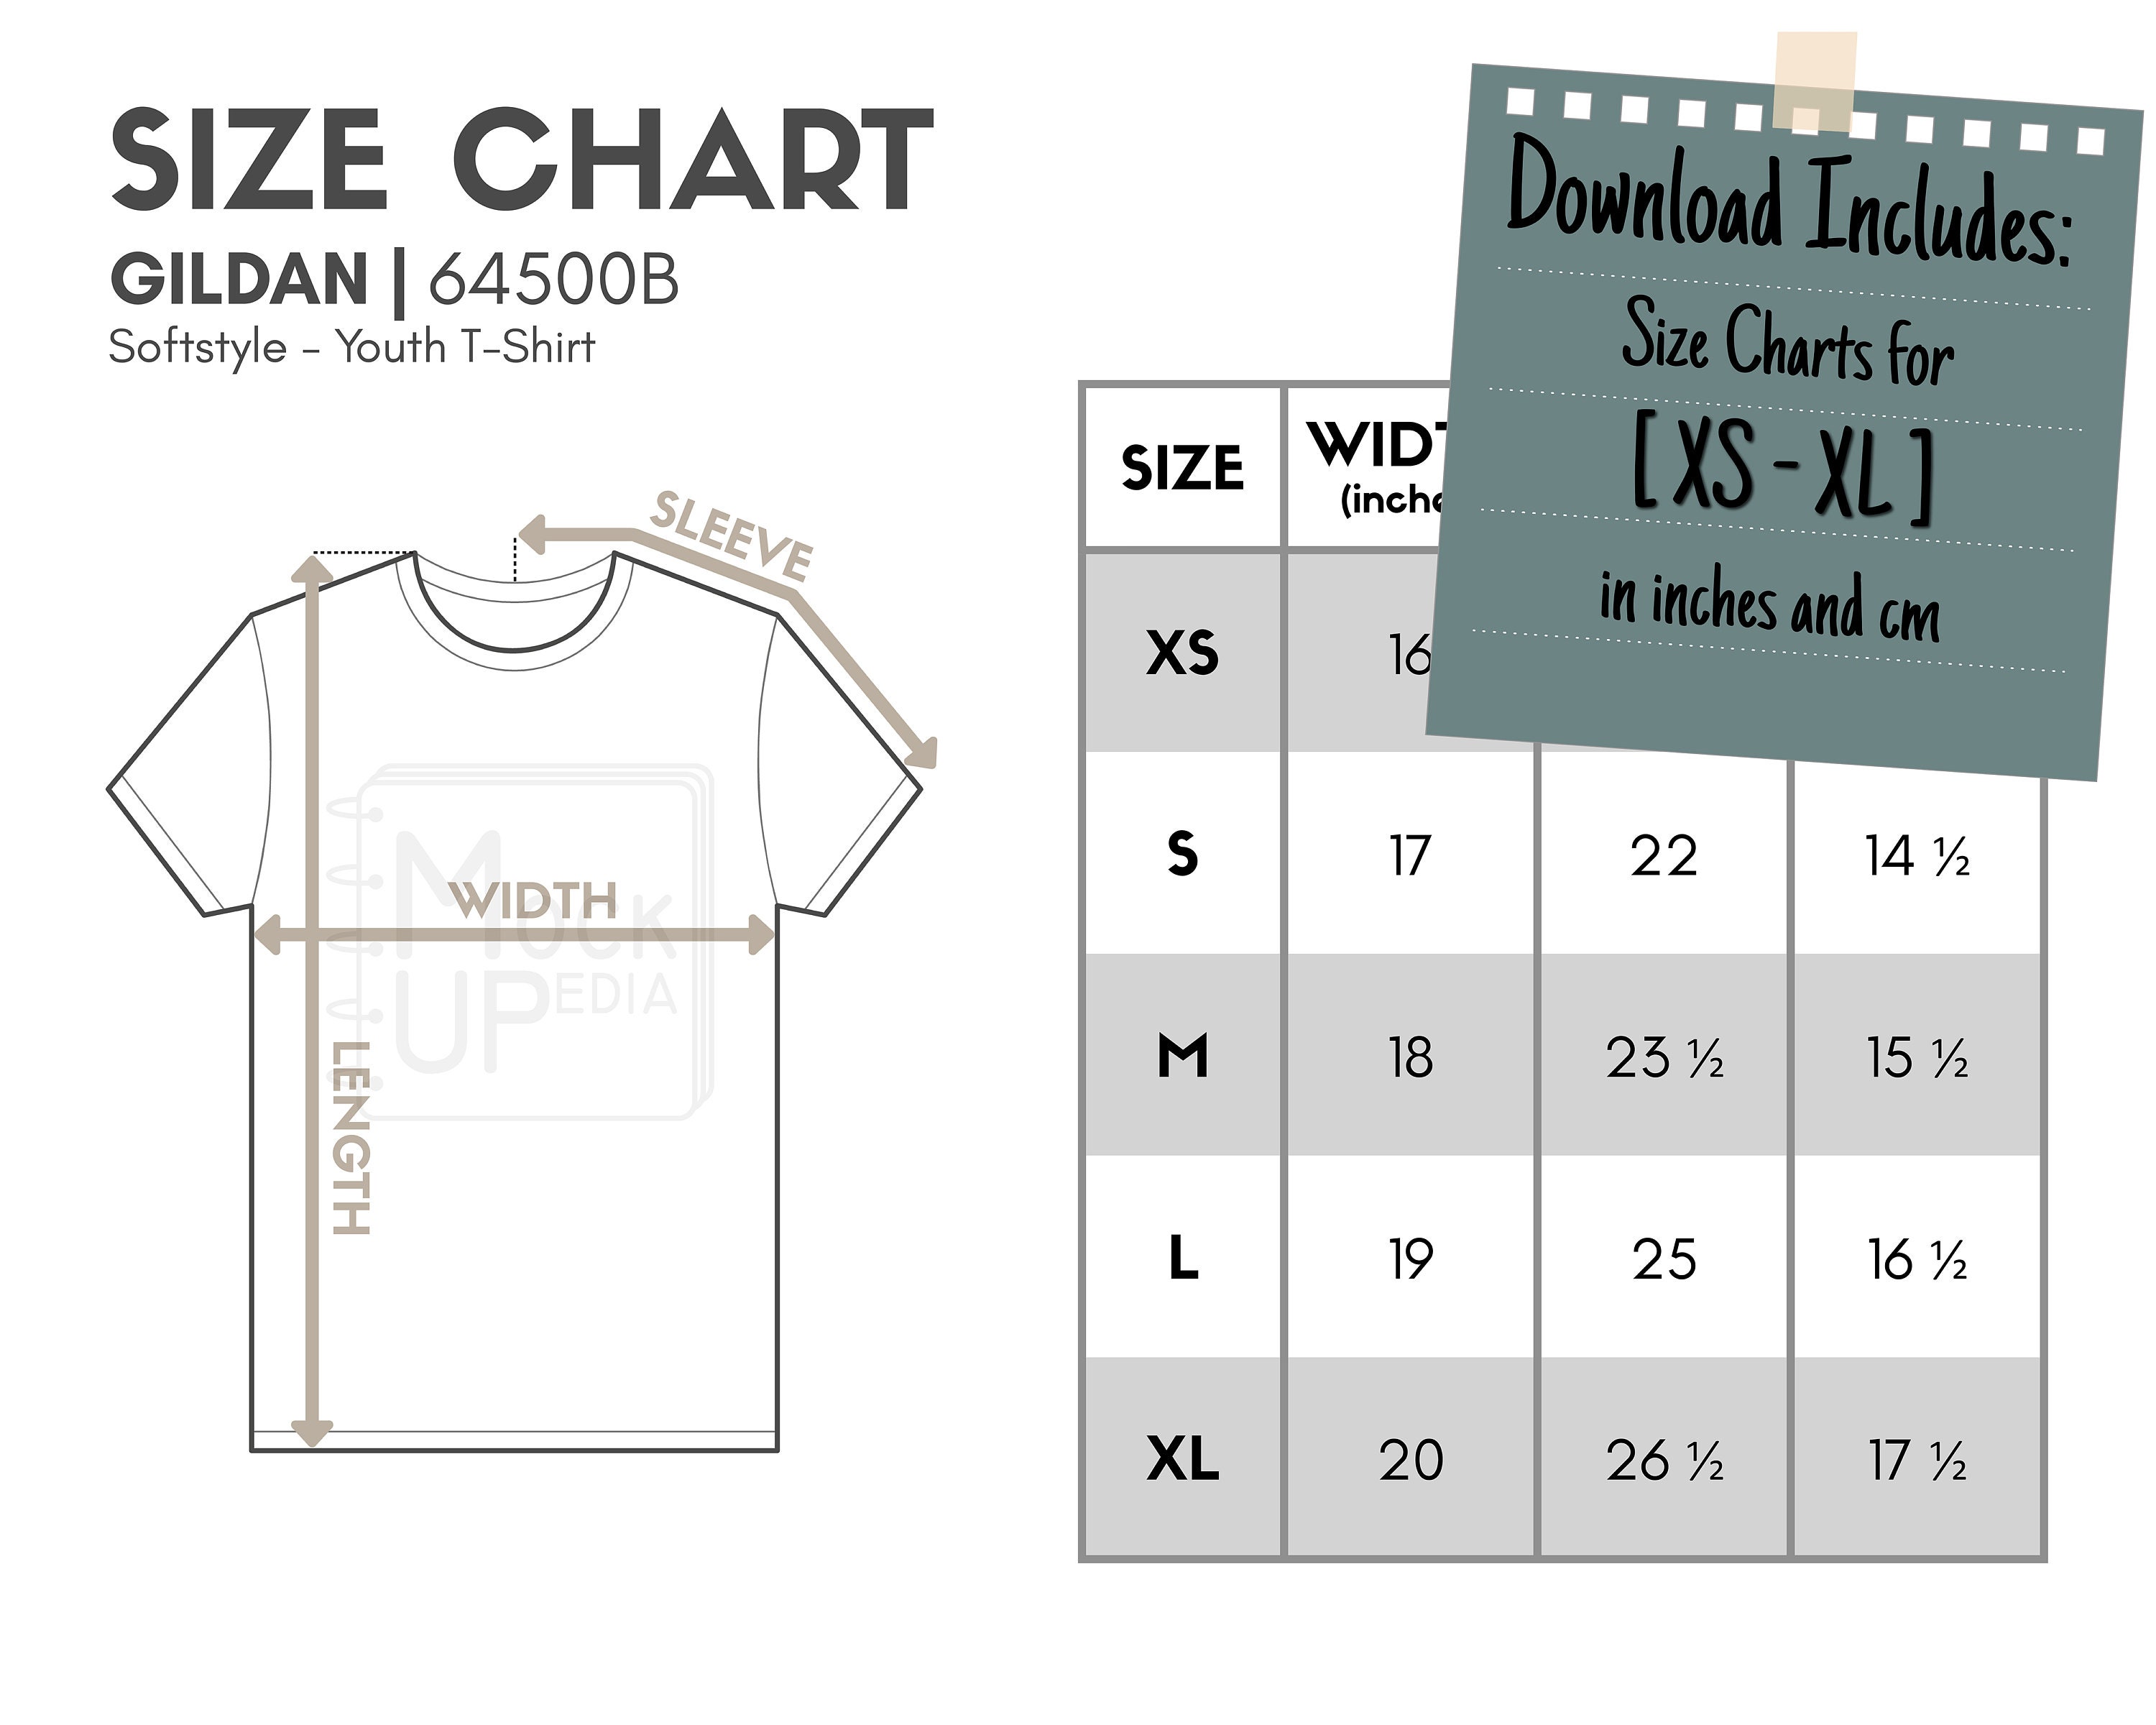 Gildan 64500B Youth T-Shirt Size Chart inches/cm Digital | Etsy